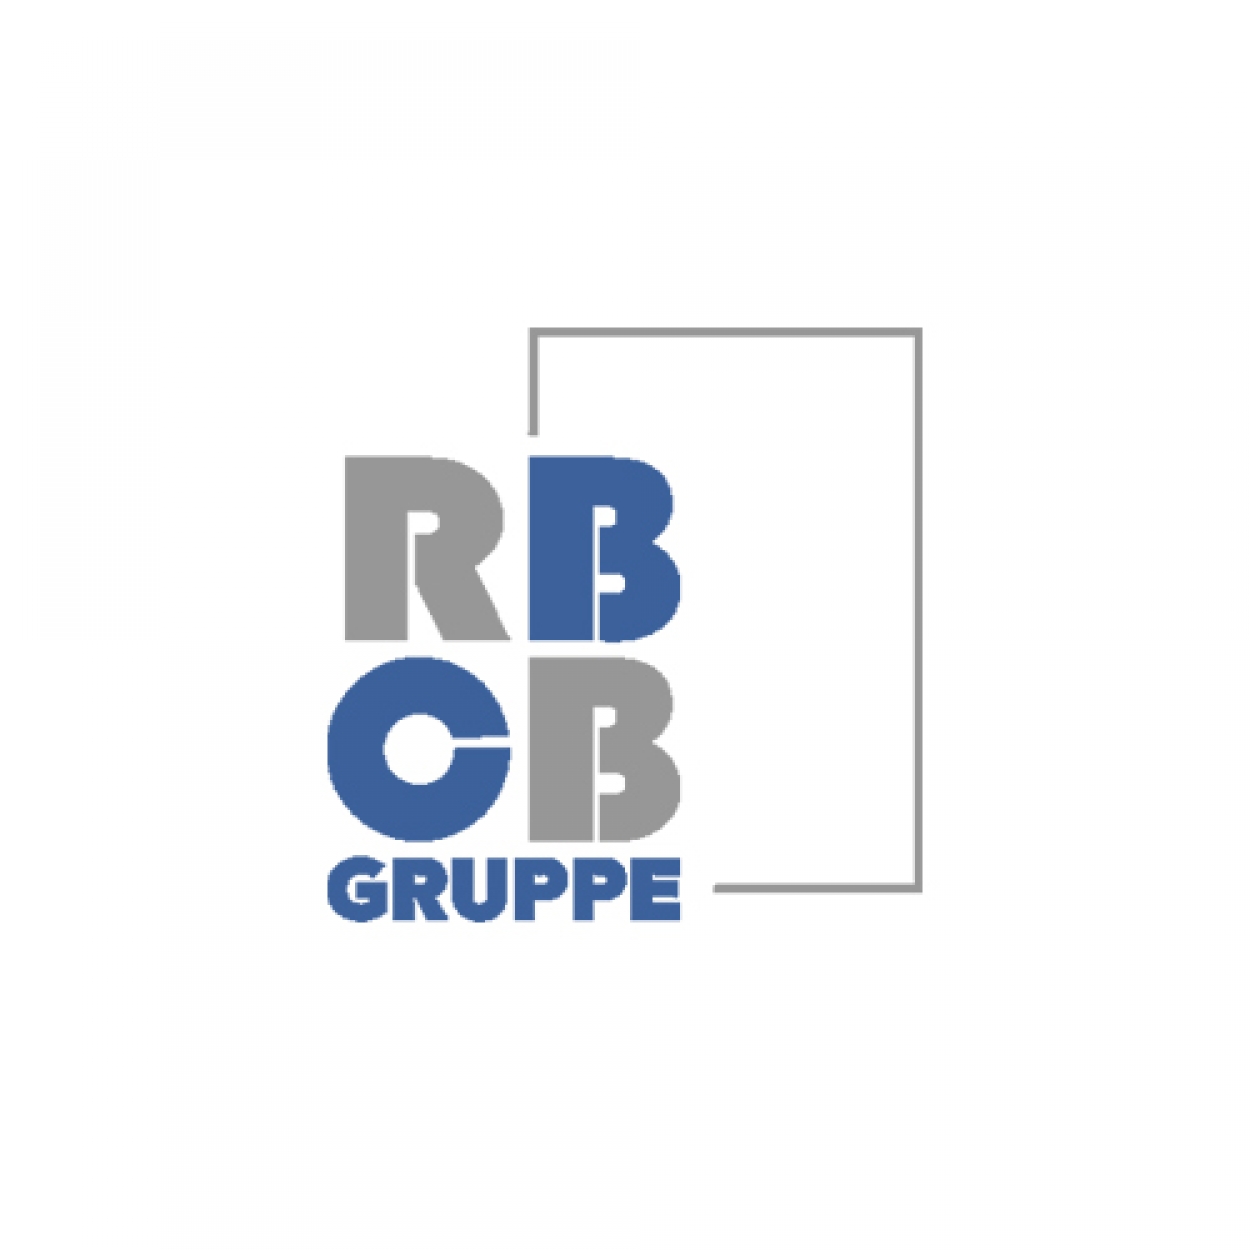 RCBB Gruppe